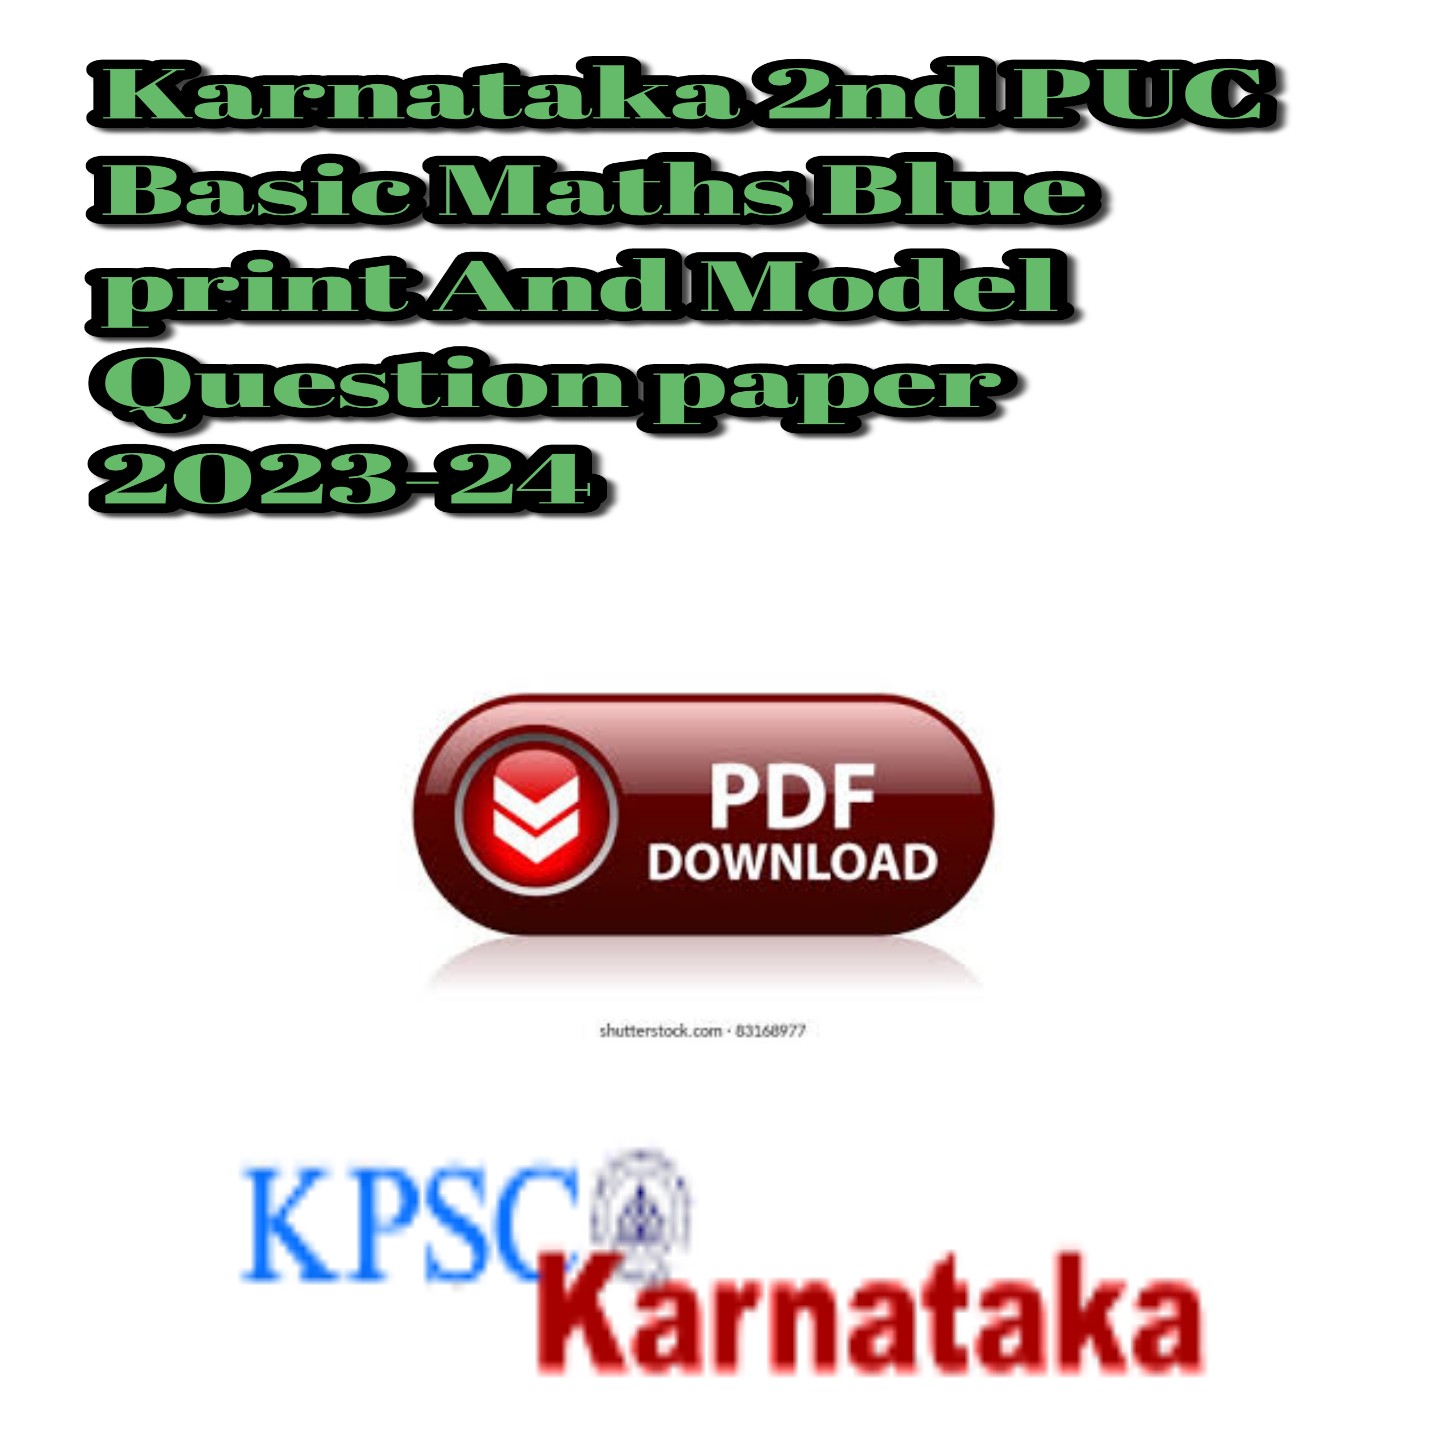 Karnataka 2nd PUC Basic Maths Blue print and Model Question paper 2023-24